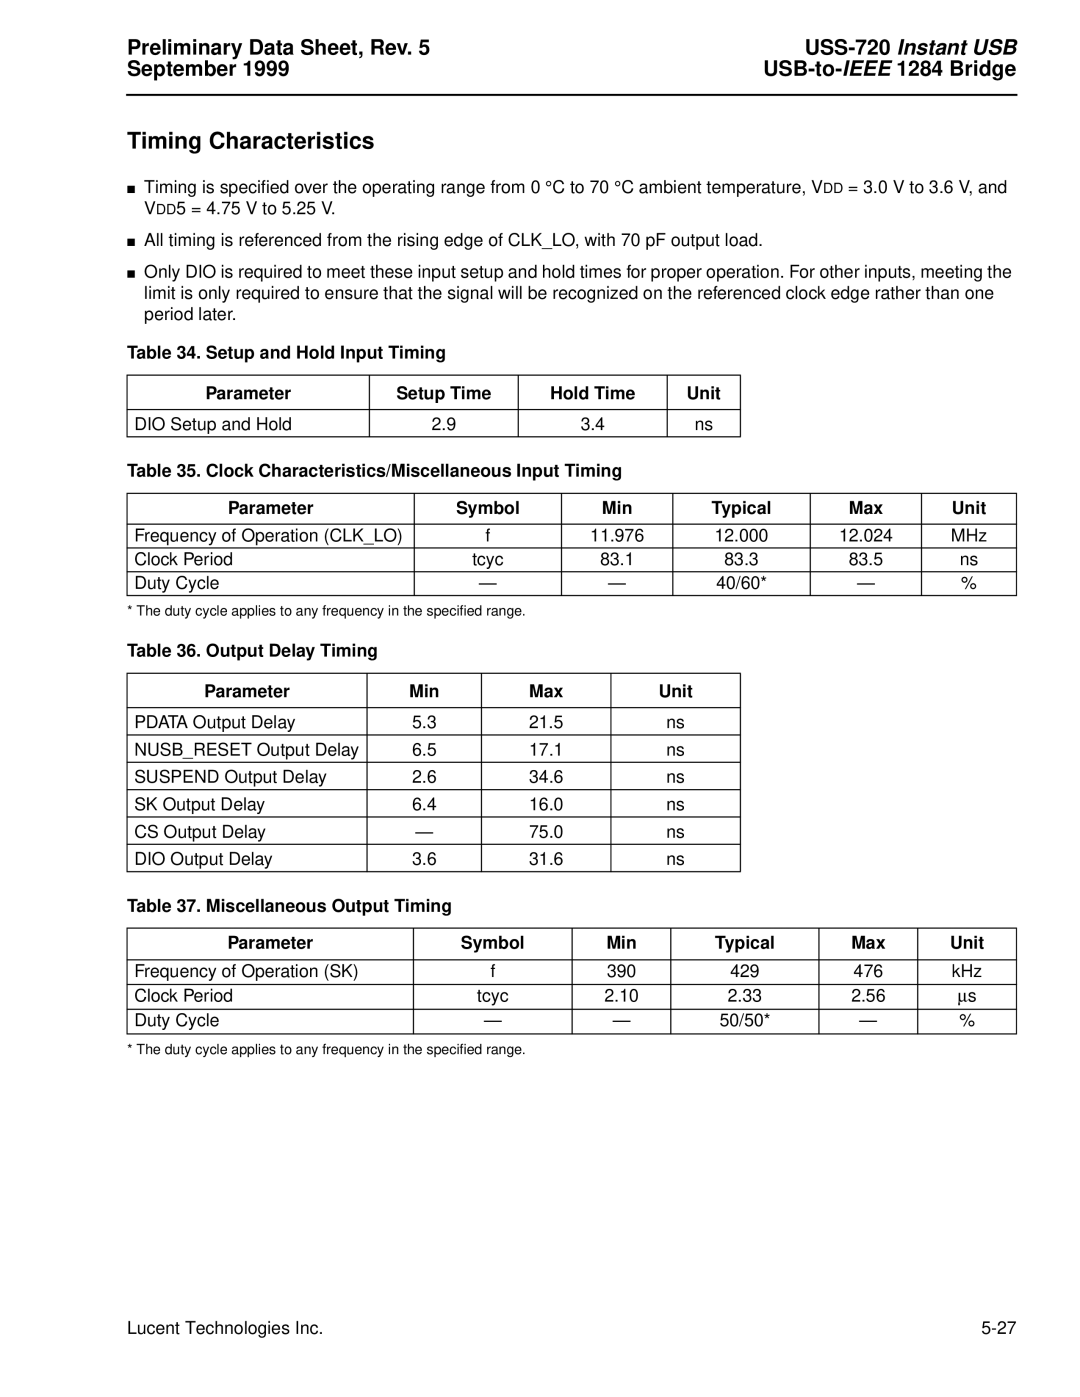 Lucent Technologies USS-720 manual Timing Characteristics, Preliminary Data Sheet, Rev, Instant USB, September, Bridge 